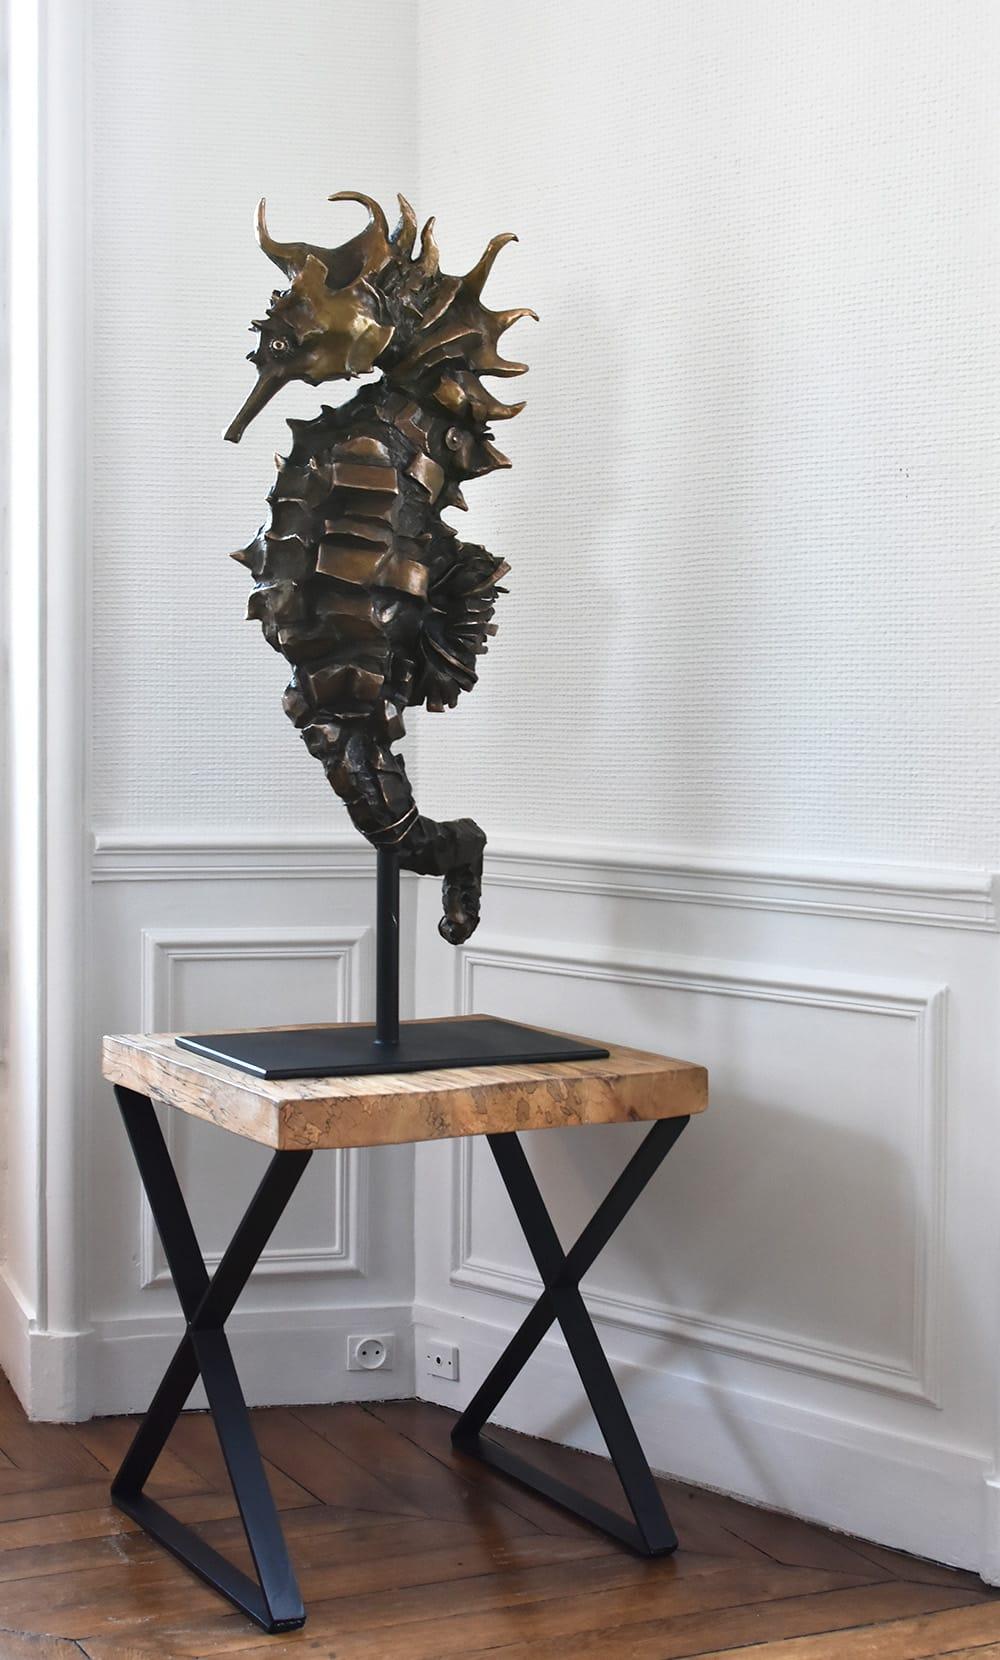 Seahorse Rex Gold by Chésade - Sealife bronze sculpture, sea animal For Sale 1